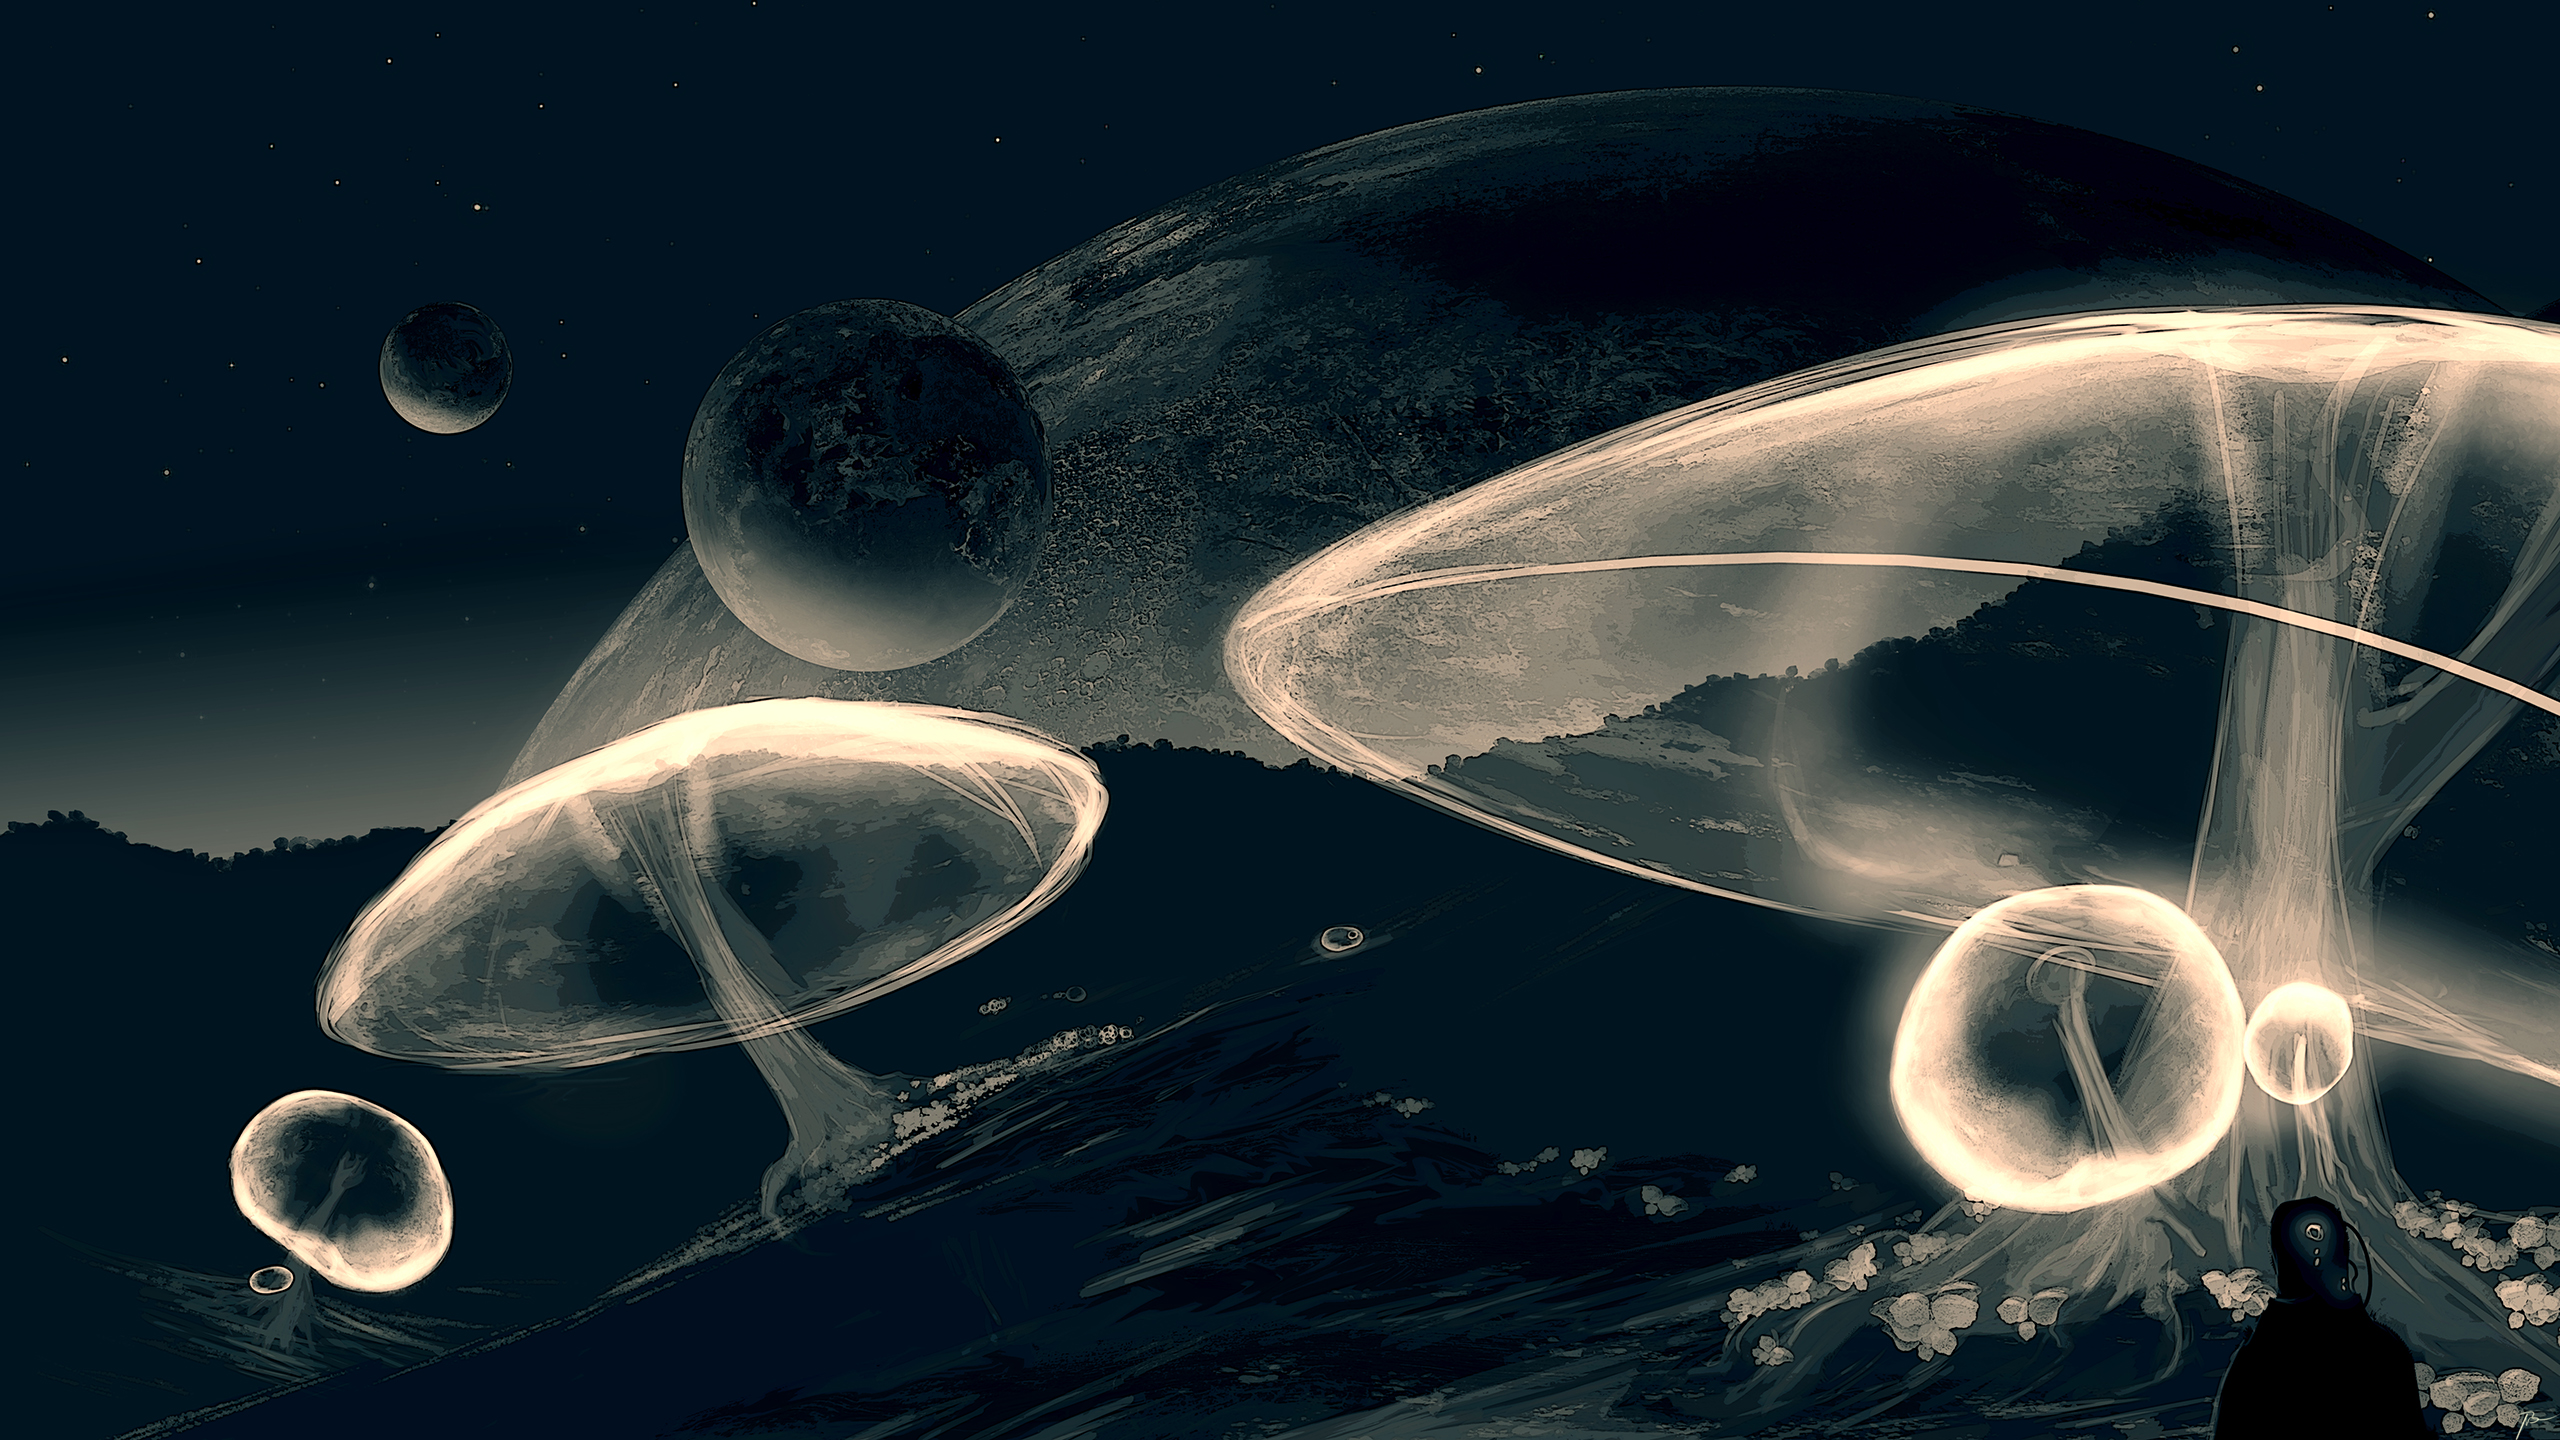 JoeyJazz Dark Mushroom Science Fiction Space Art 2560x1440